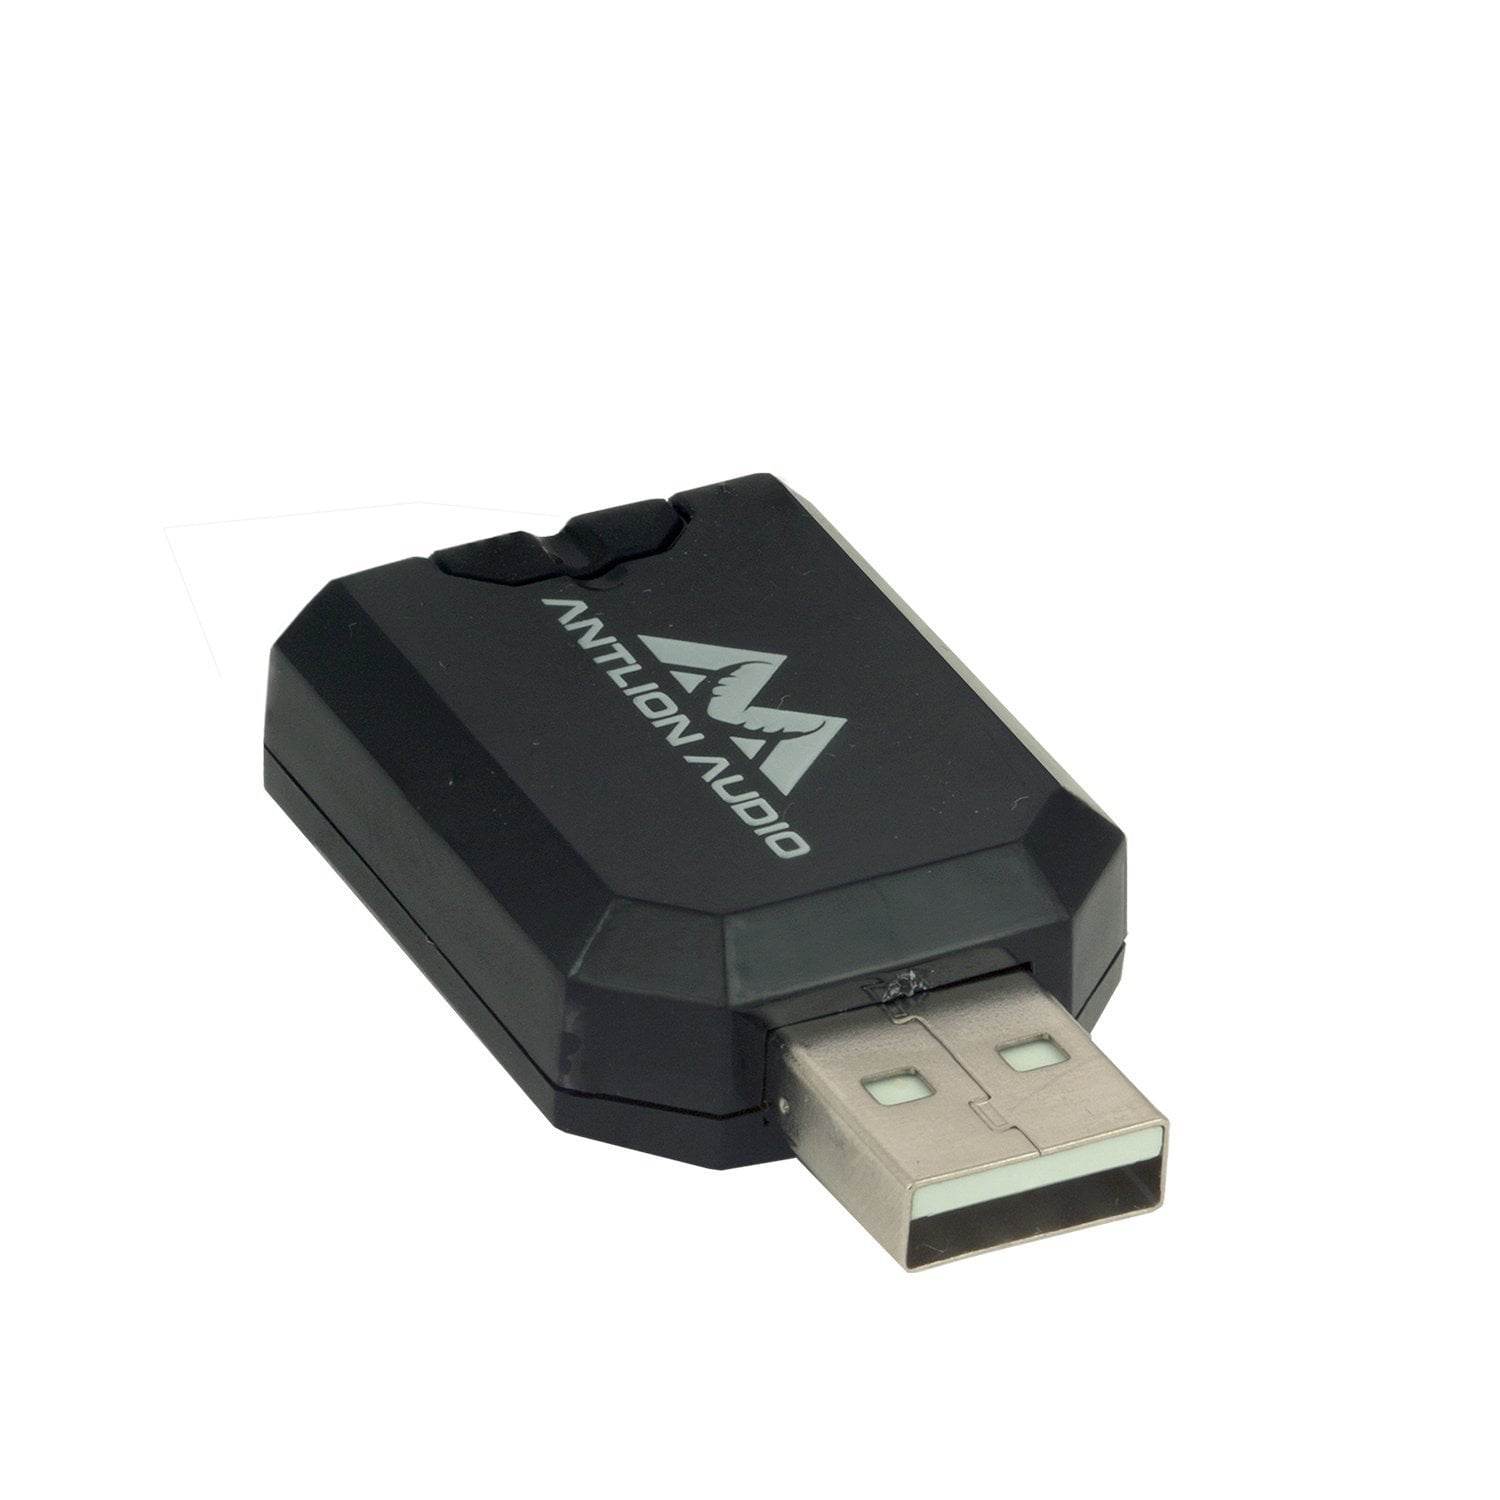 Usb audio out. USB адаптер ml 0649. STMICROELECTRONICS USB Adapter. USB адаптер Nexion. Поворотный переходник USB.